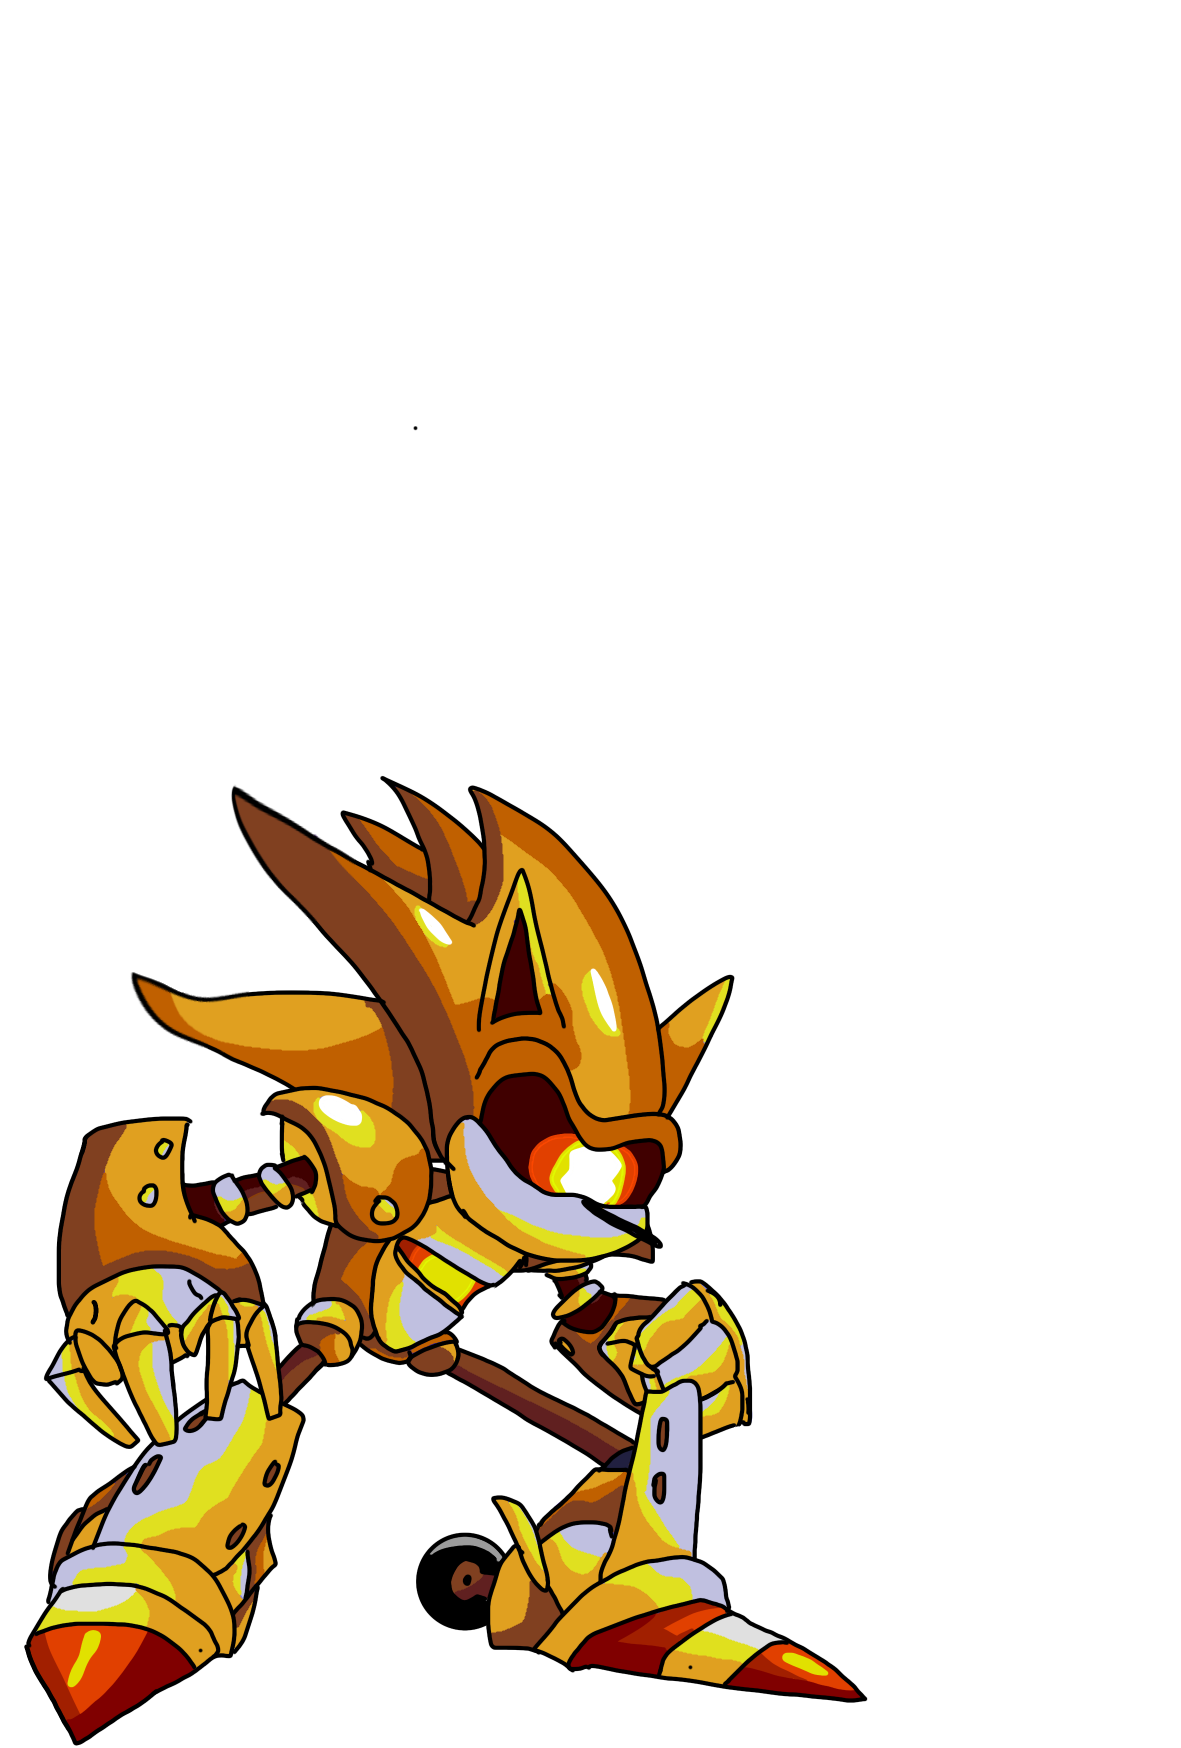 Mania Metal Sonic Over Mecha Sonic [Sonic 3 A.I.R.] [Mods]